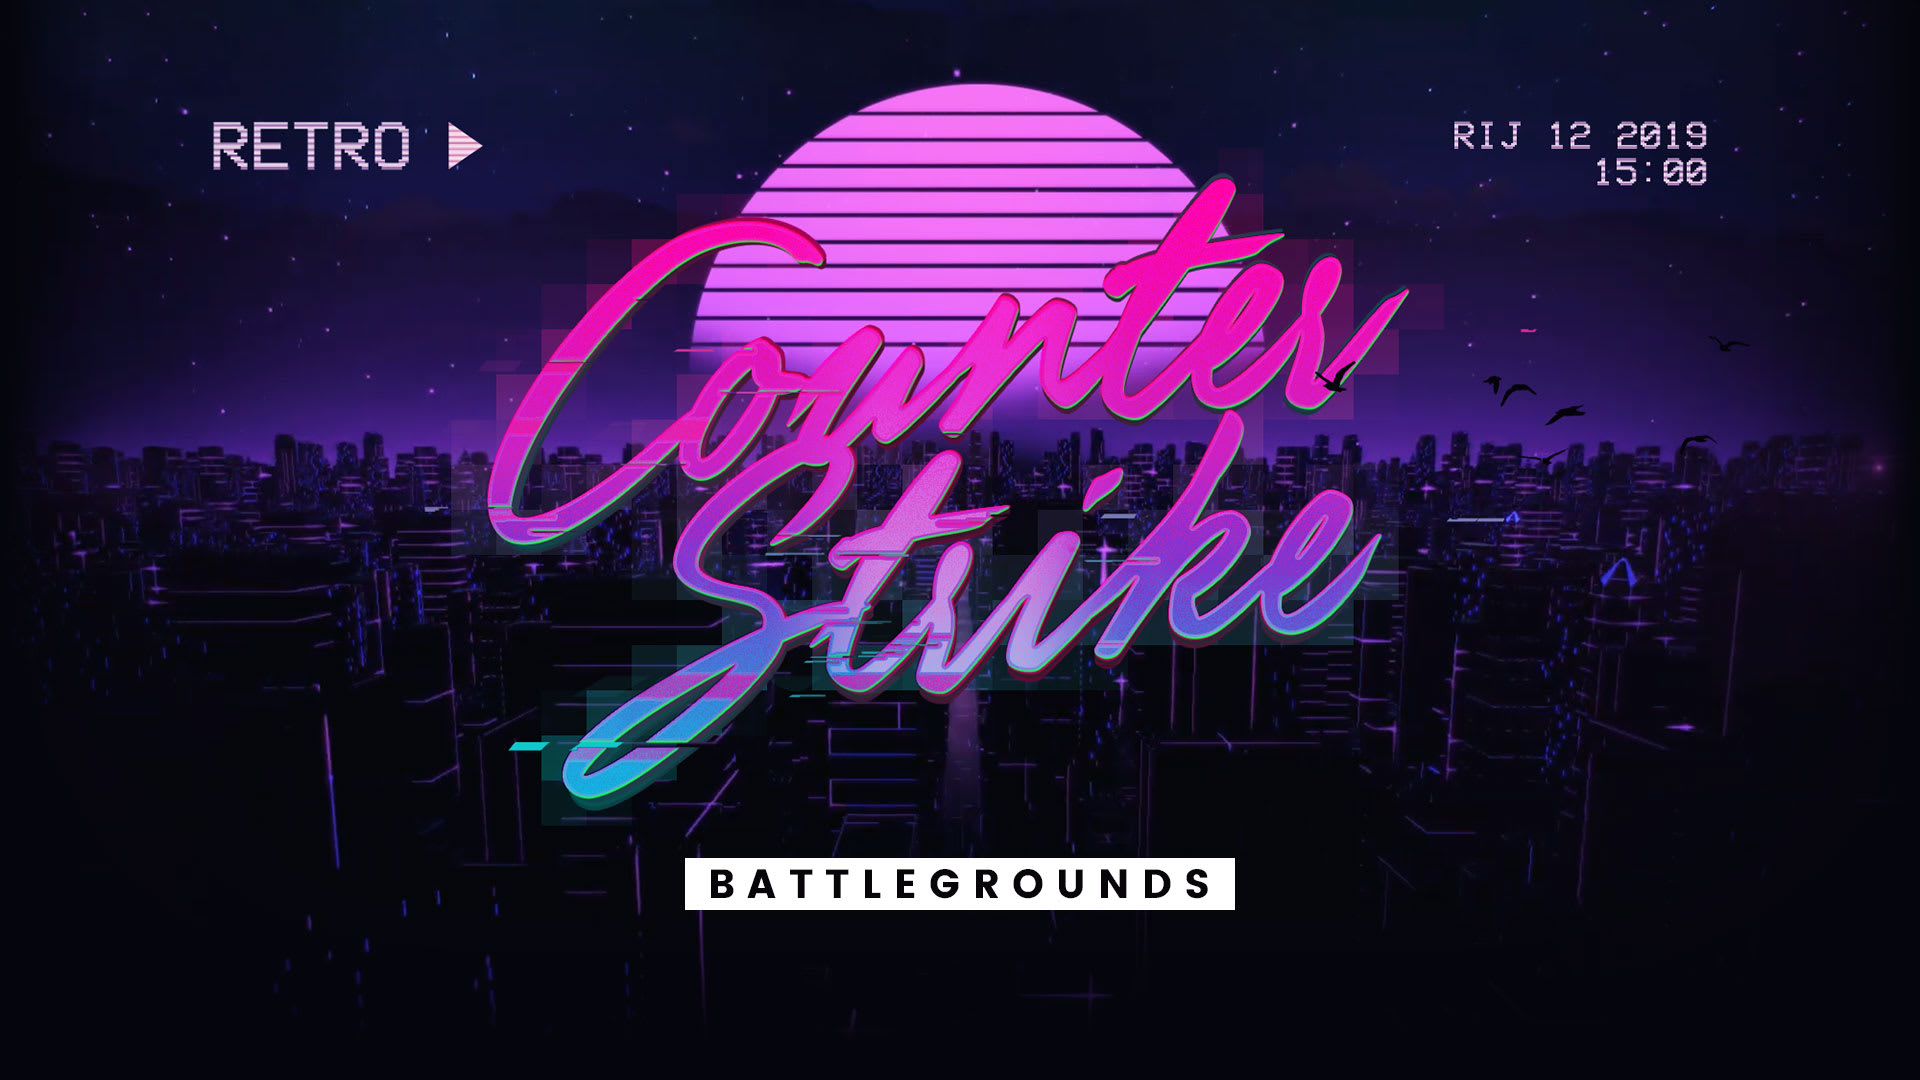 Retro Battlegrounds